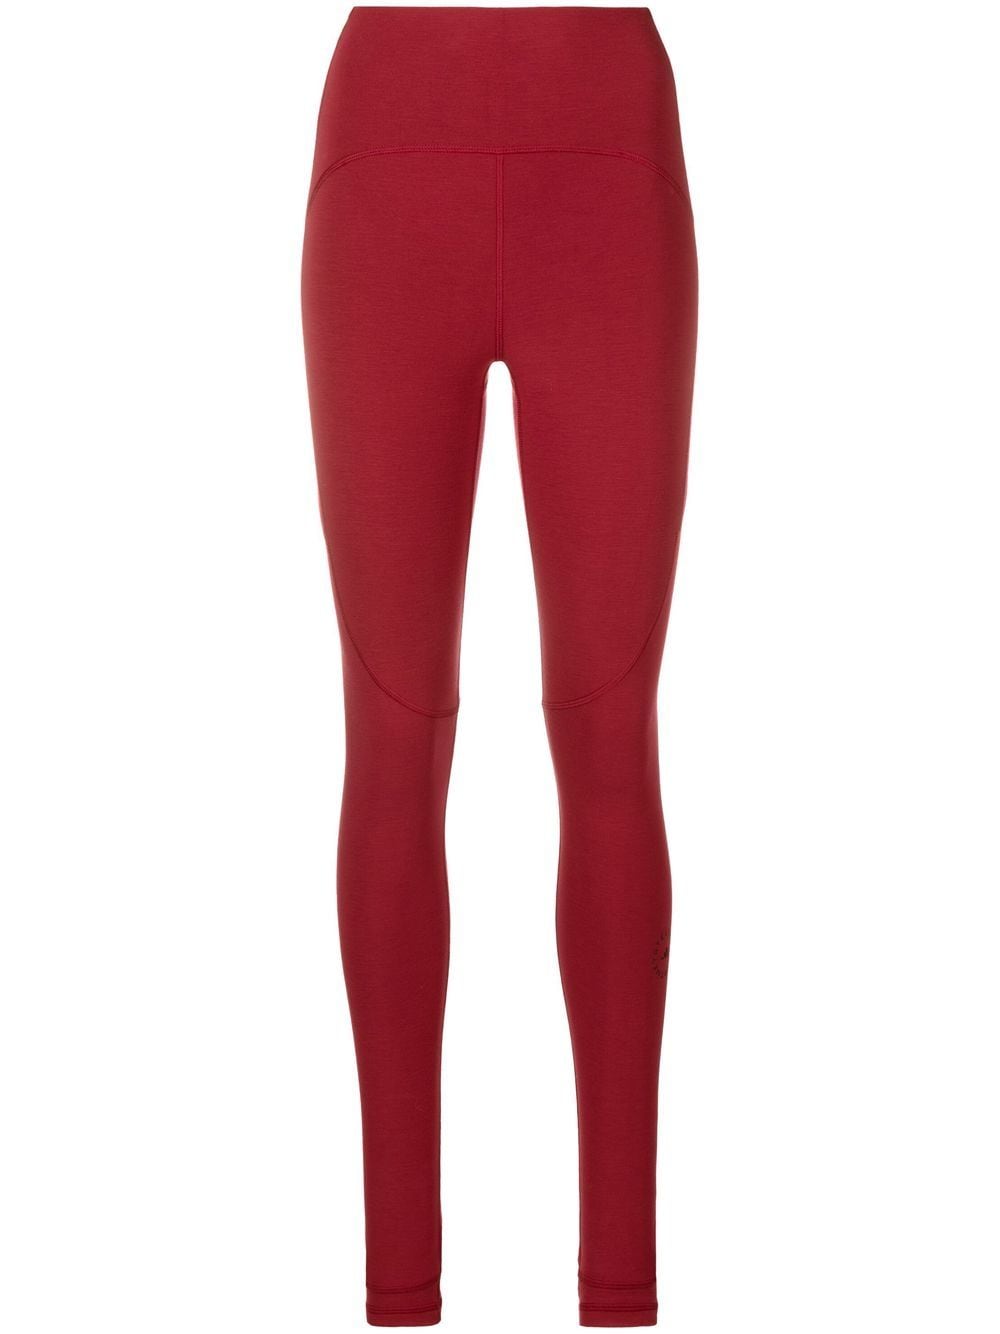 adidas by Stella McCartney TrueStrength yoga leggings - Red